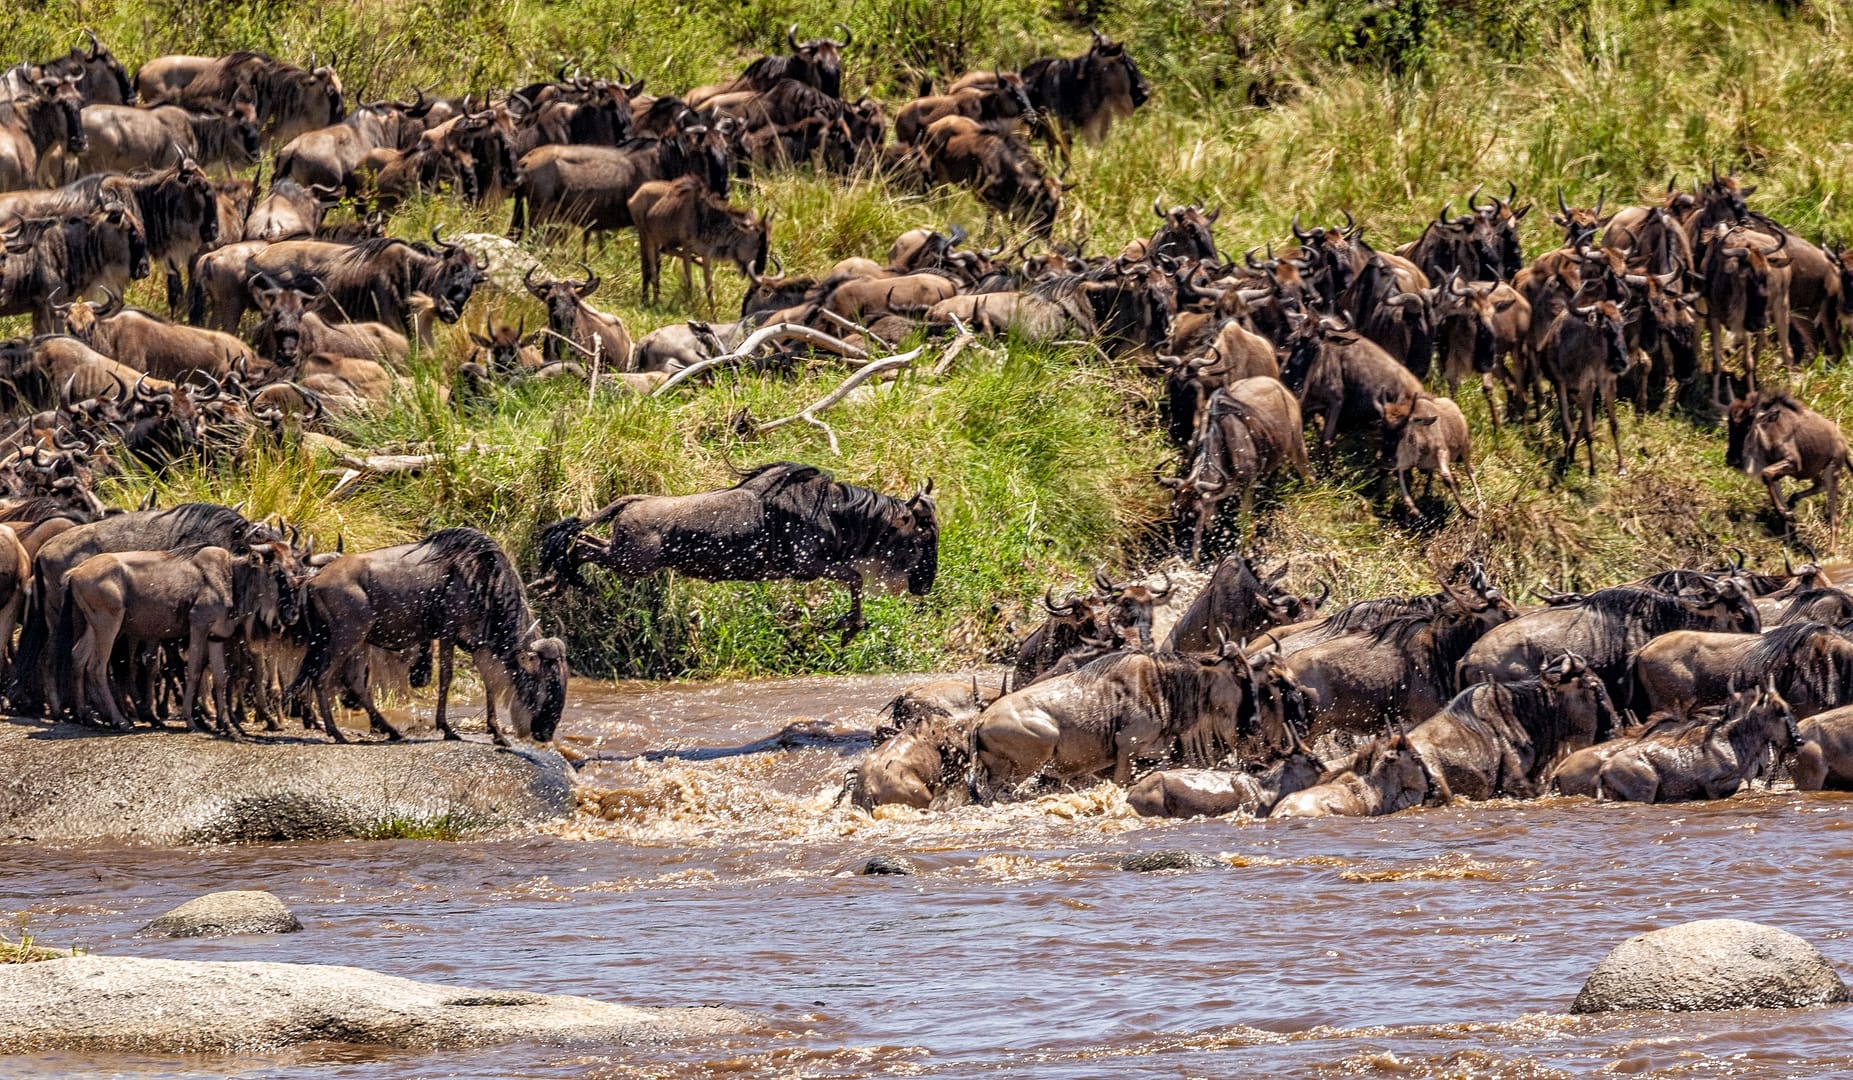 Wildebeest cross the Mara River during a Serengeti safari